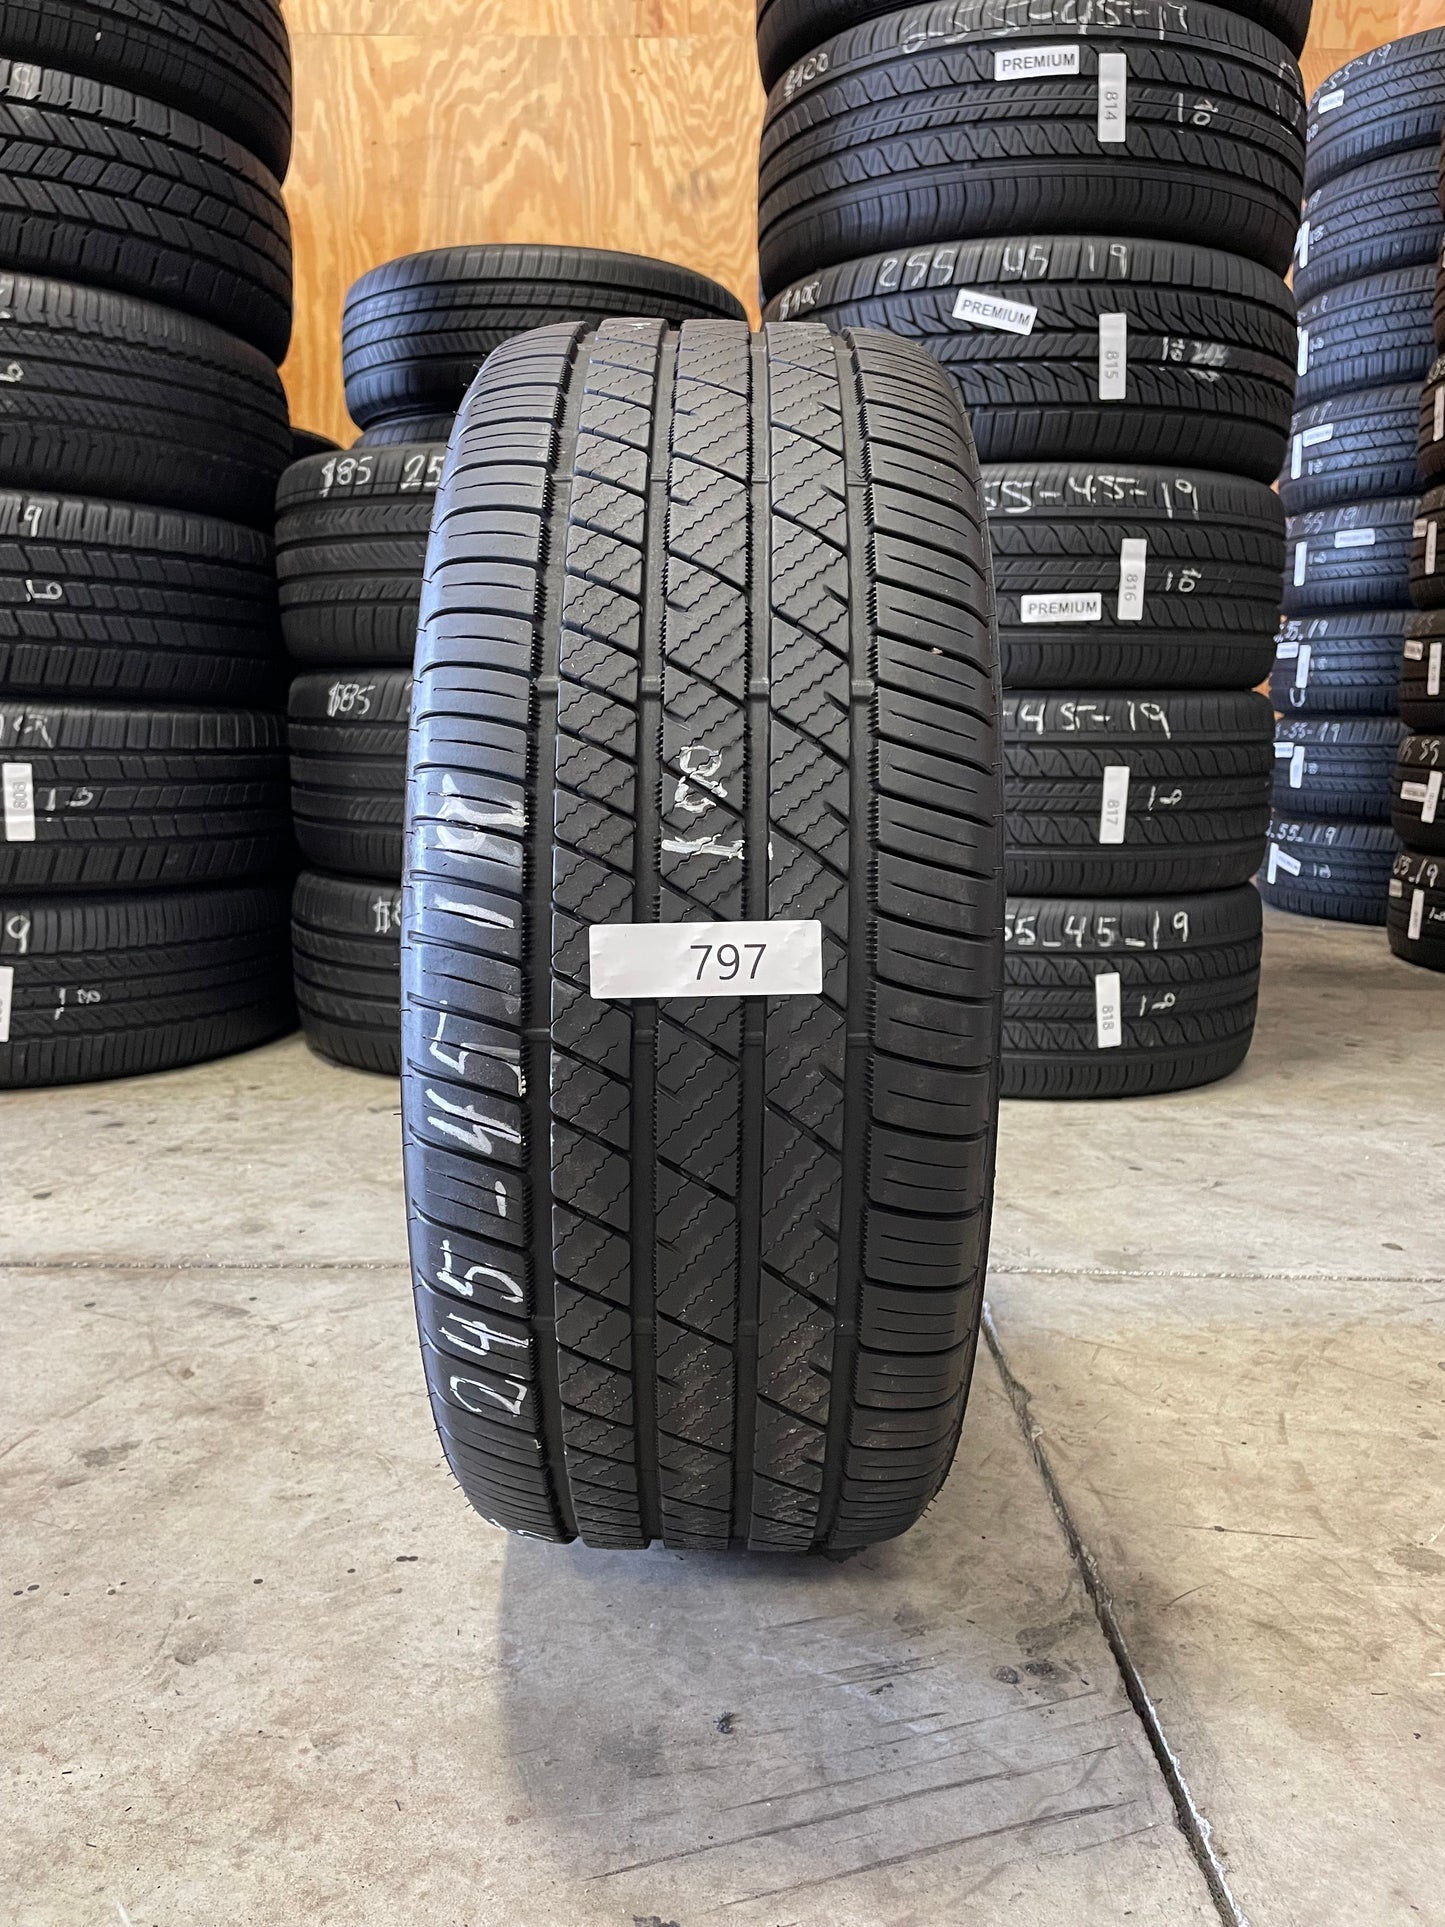 SINGLE 245/45R19 Bridgestone Potenza RE980 AS 98 W SL - Premium Used Tires